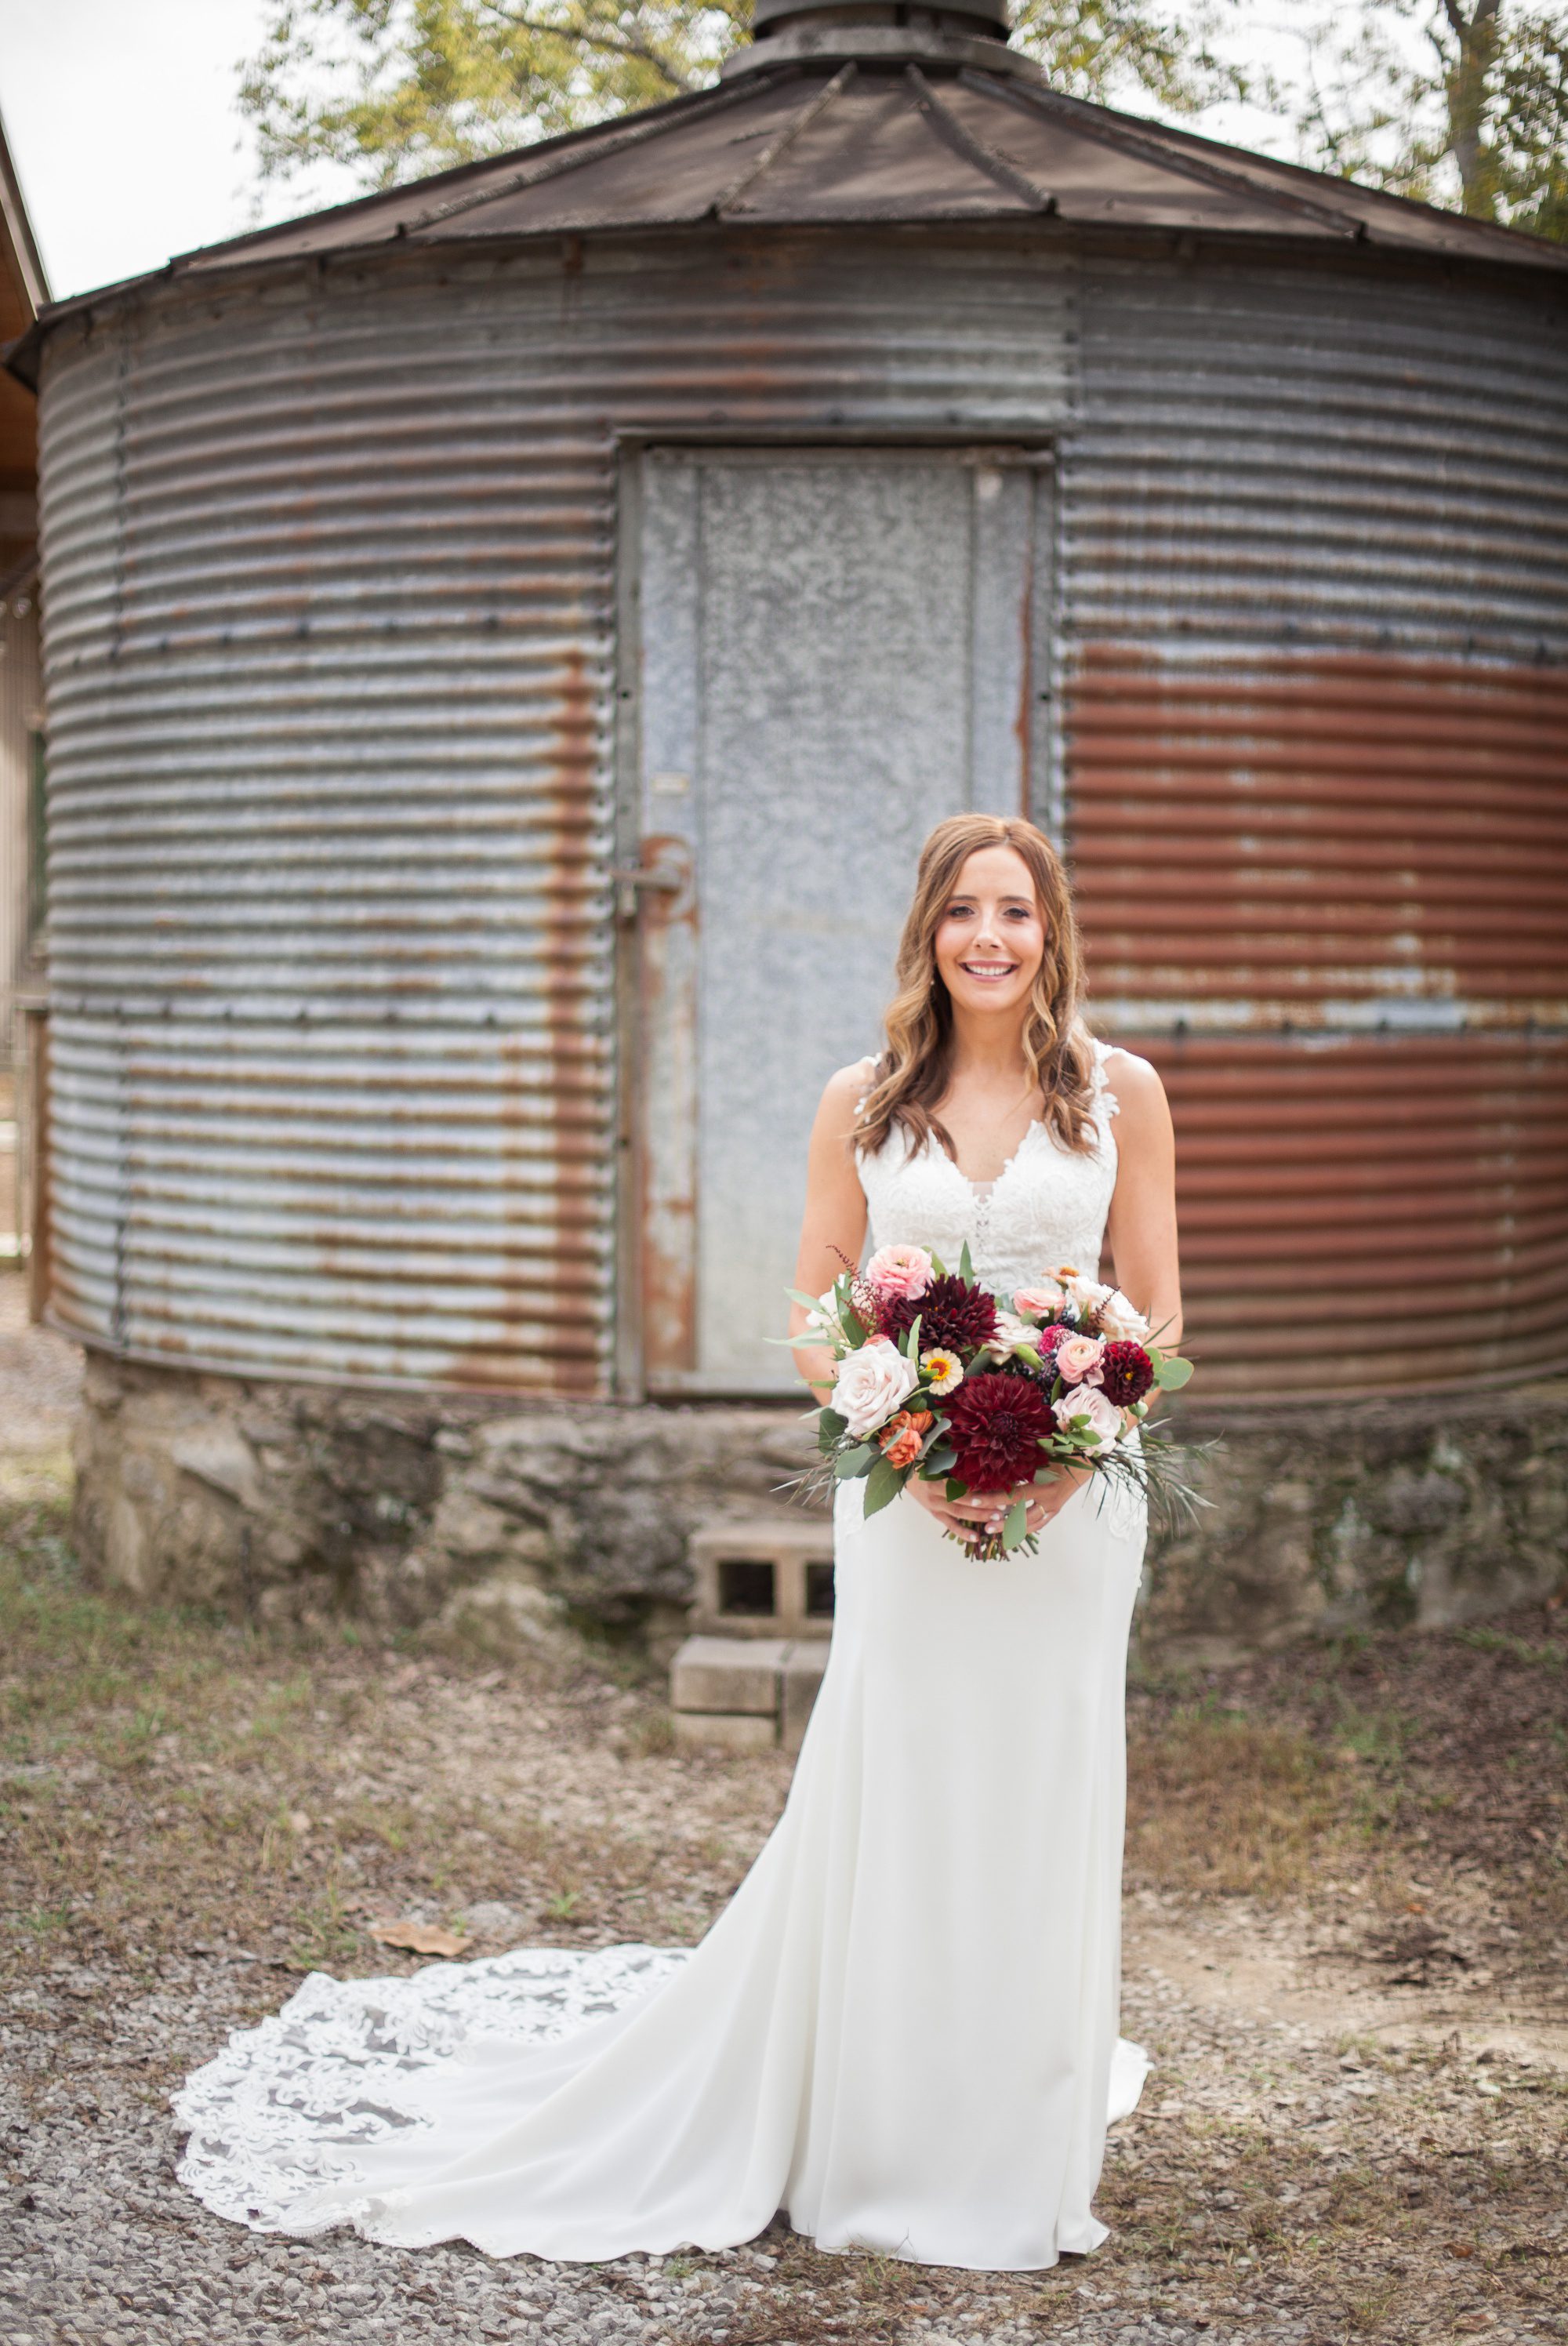 Bride with bouquet photos before wedding ceremony photography at Green Door Gourmet in Nashville, TN